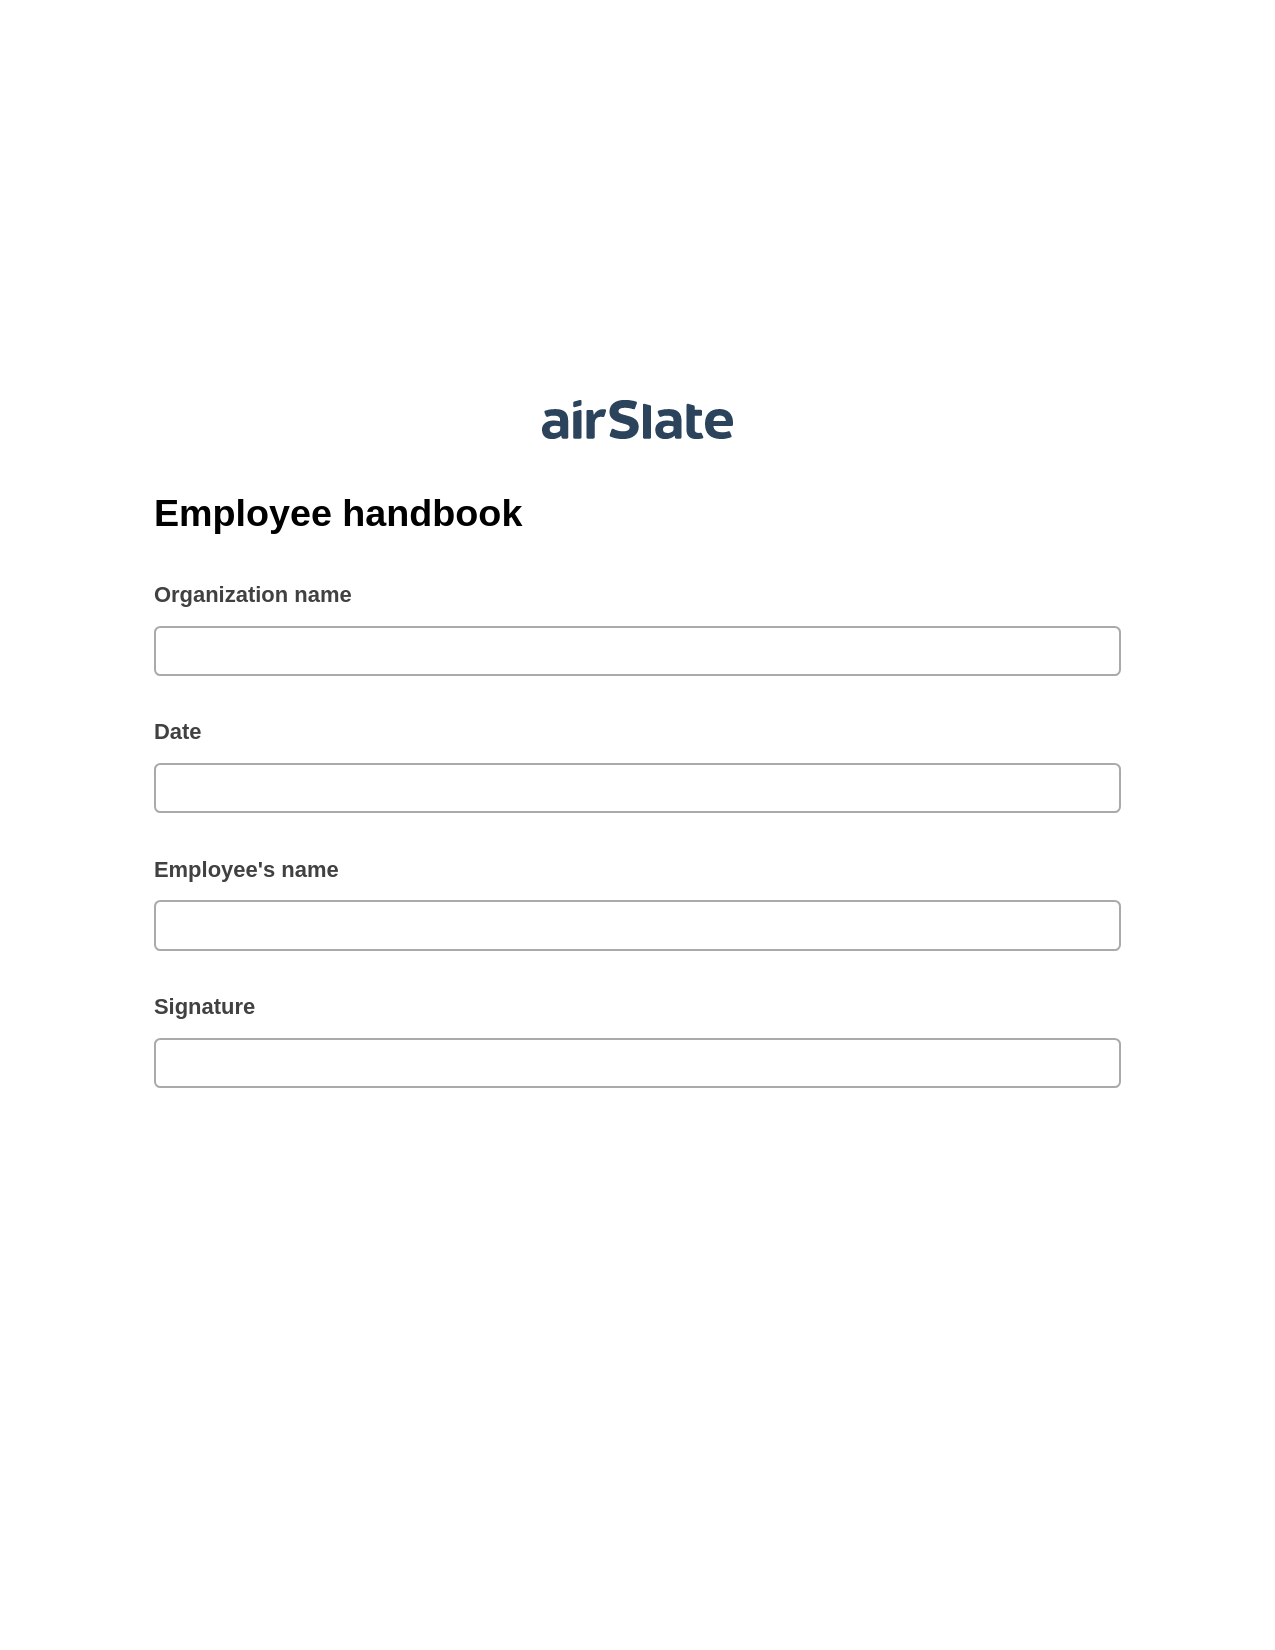 Employee handbook Pre-fill from CSV File Bot, Send Mailchimp Campaign Bot, Box Bot